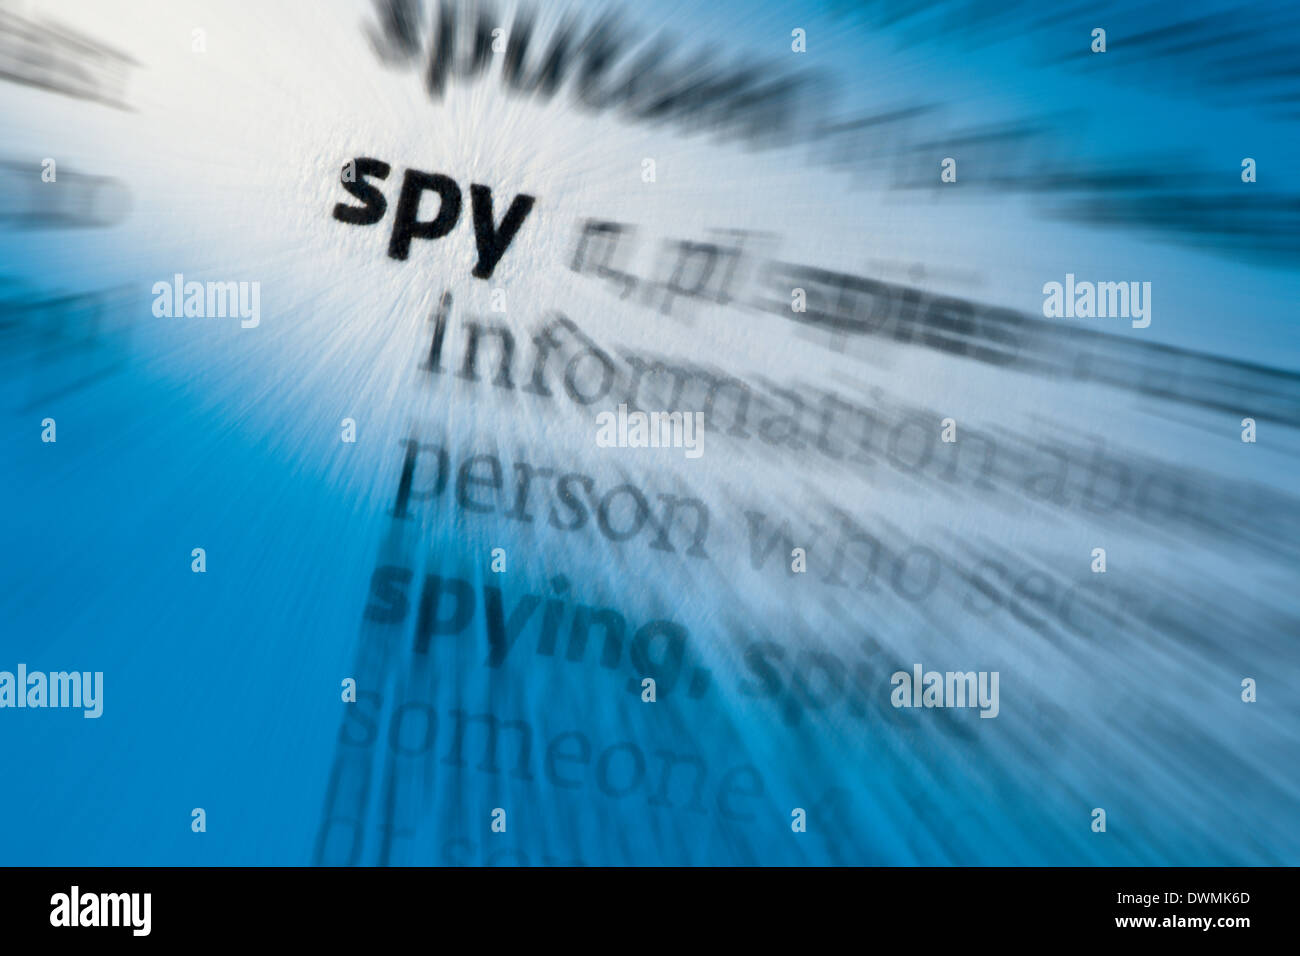 Spy - Spying Stock Photo